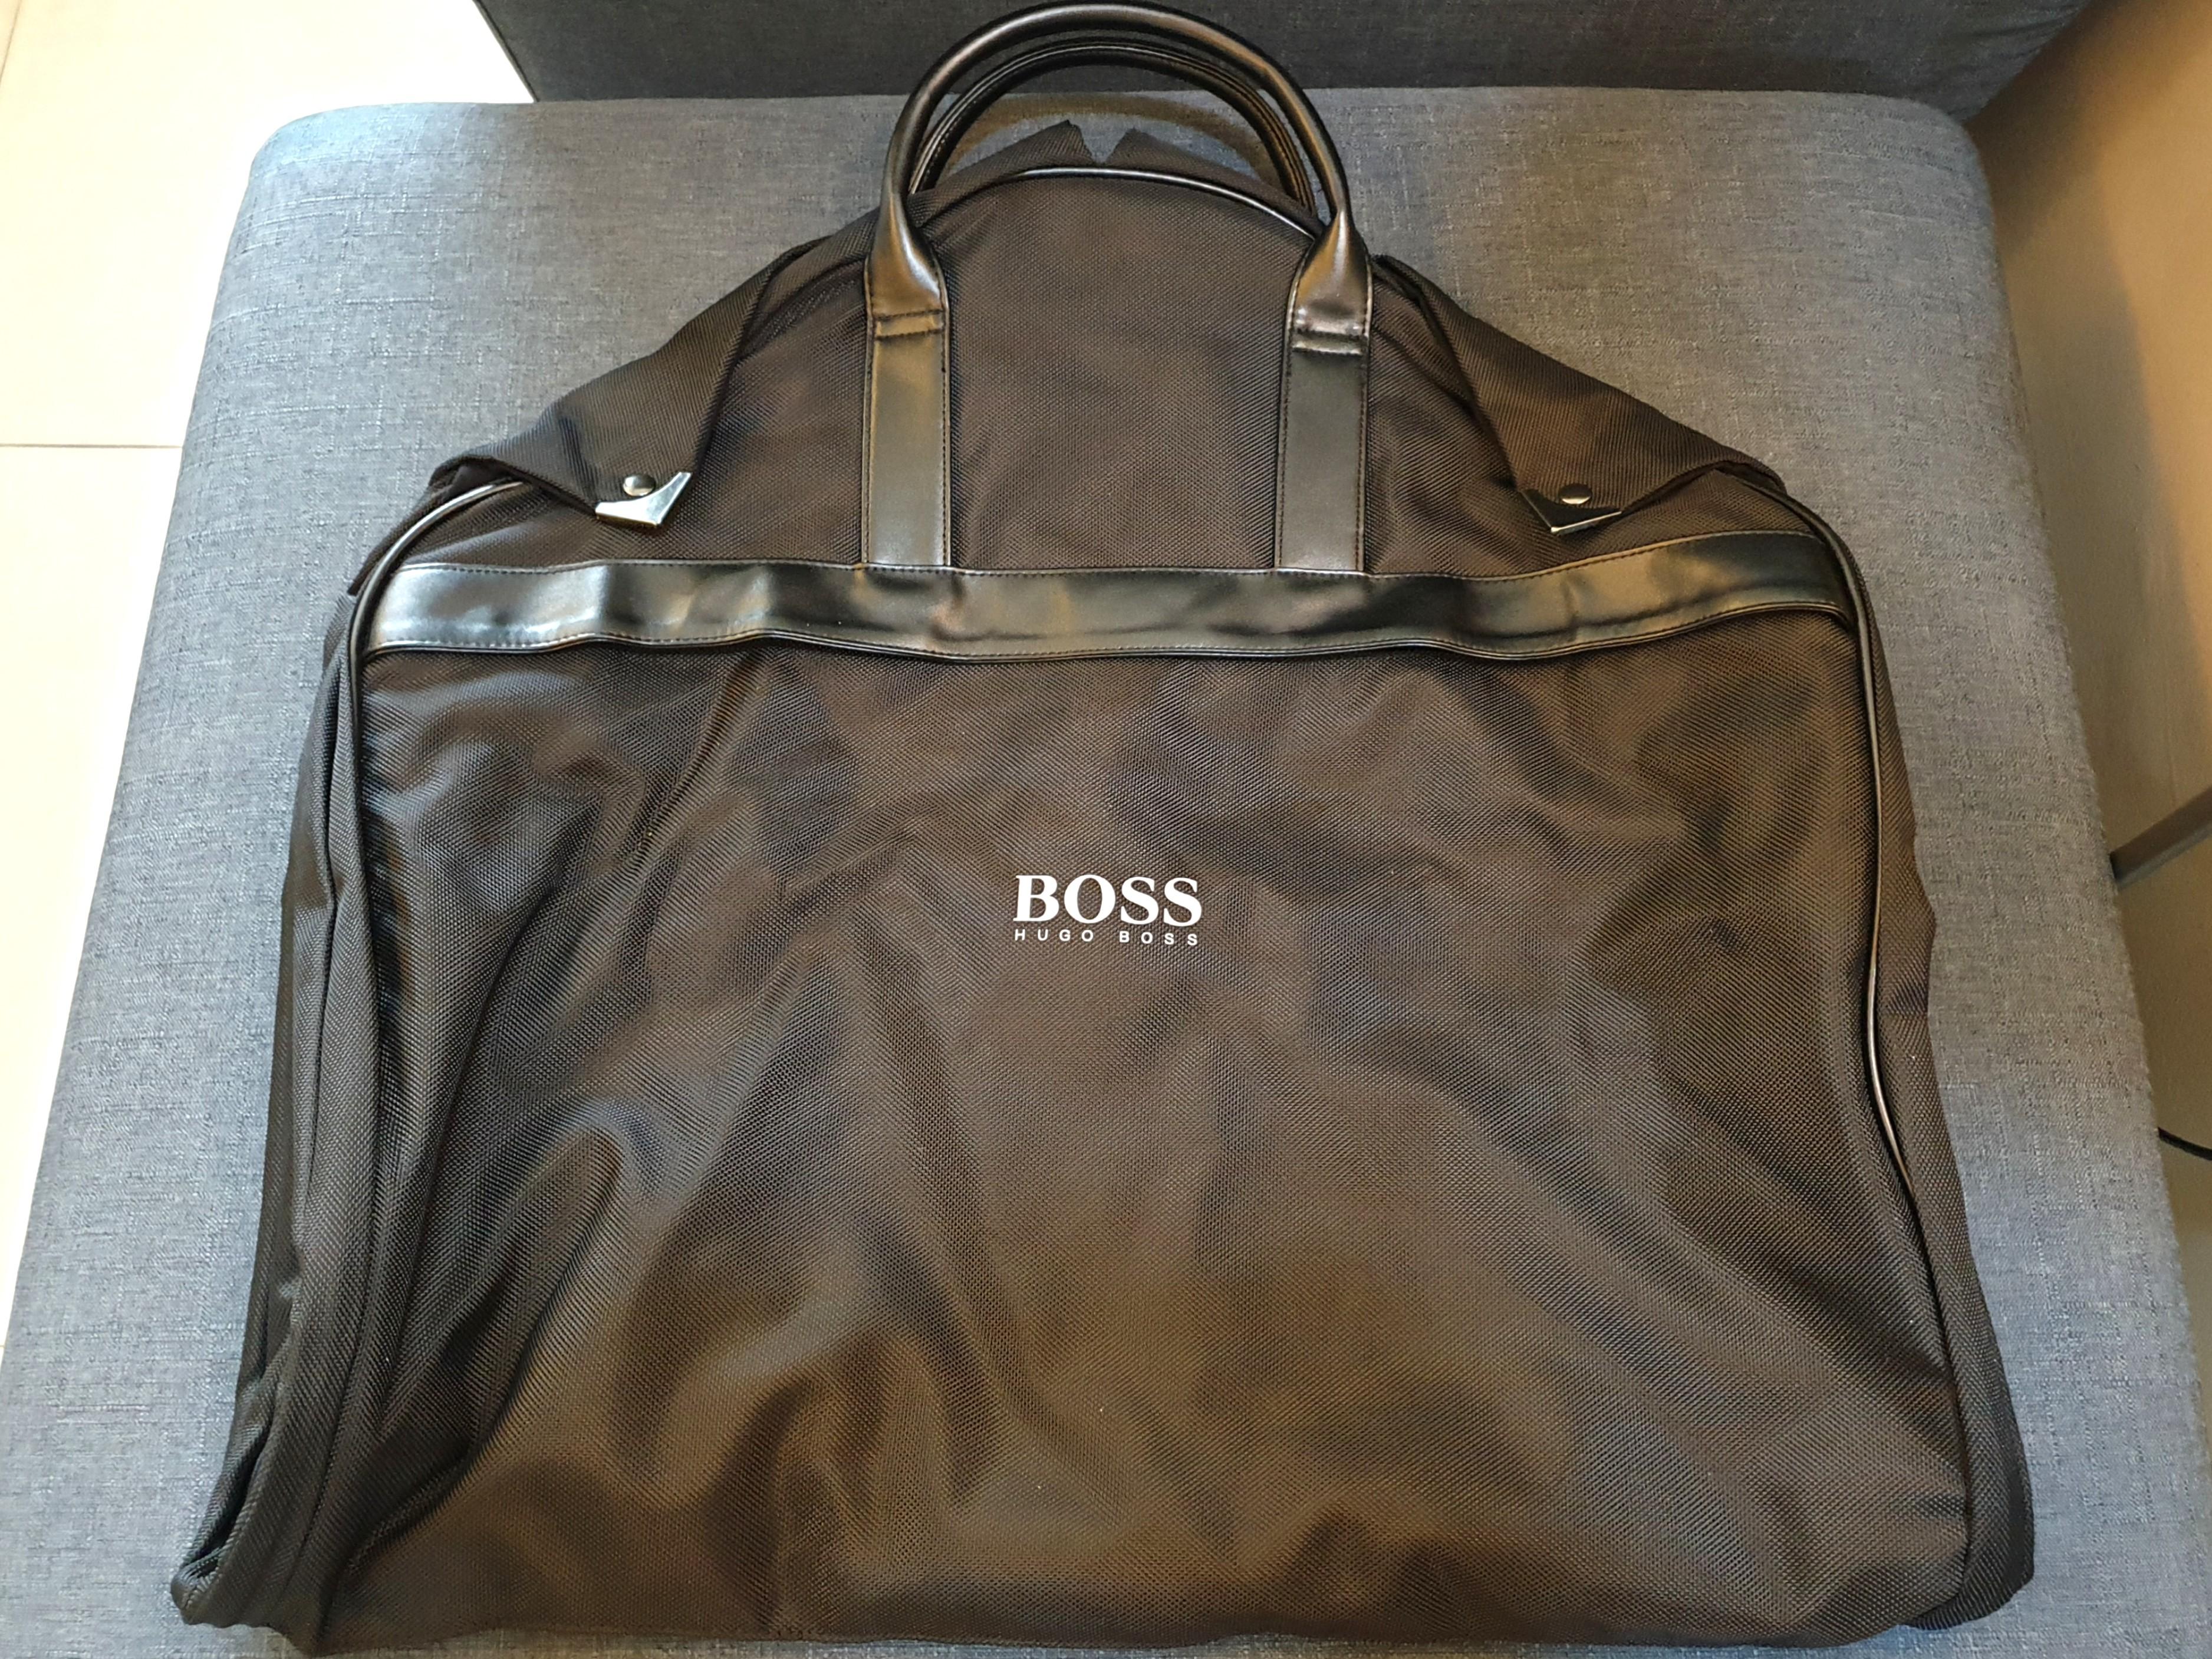 hugo boss suit cover bag